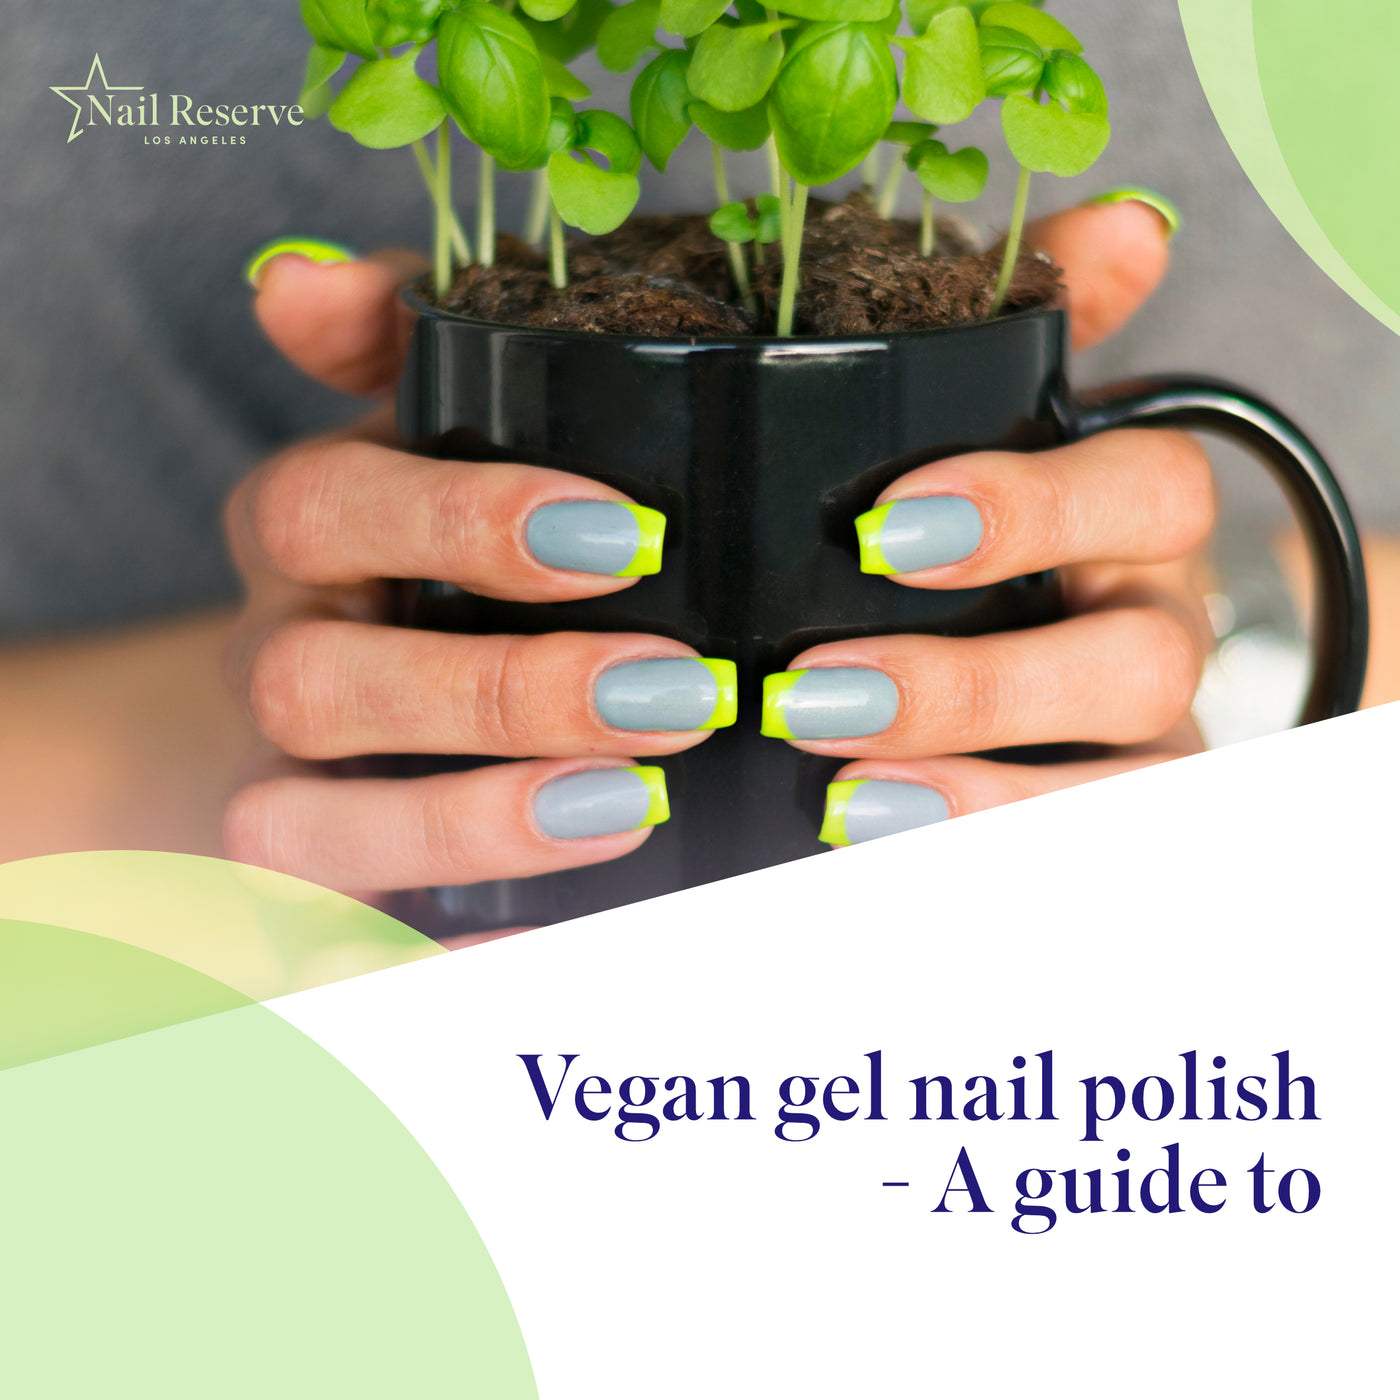 Vegan gel nail polish - a guide to